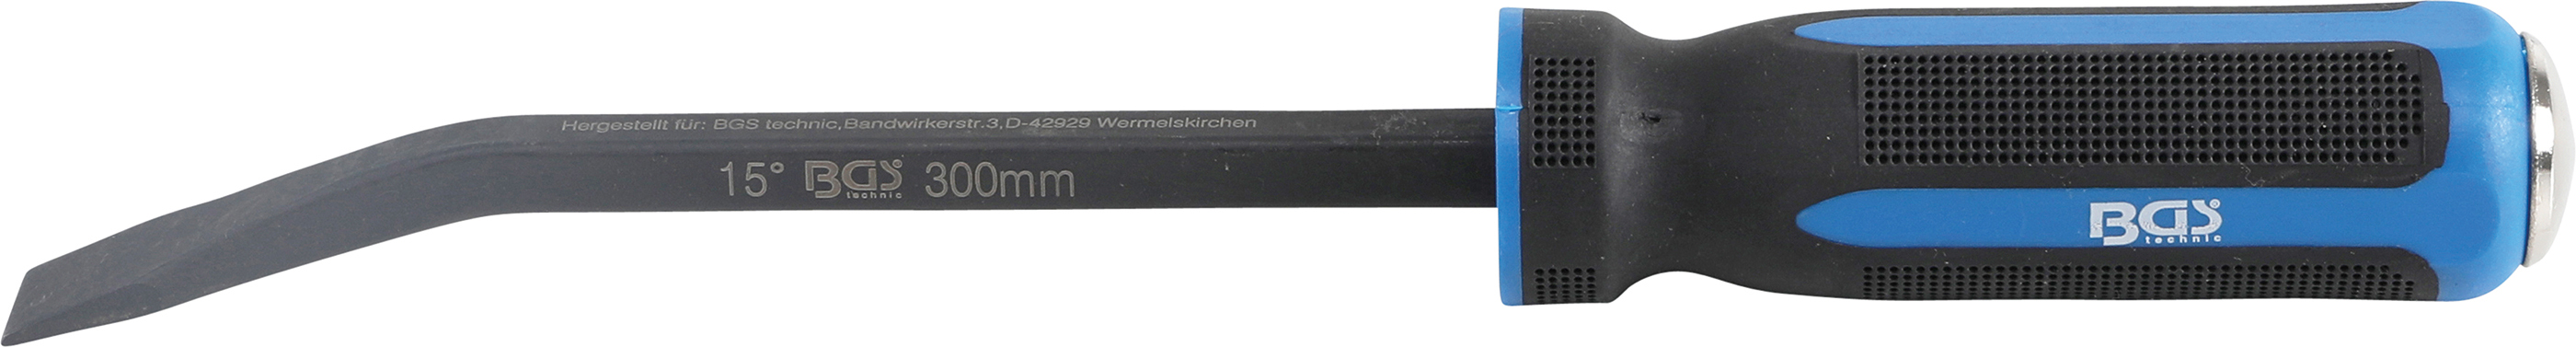 BGS 9137-2 Levier pentru mecanici cu maner bimaterial, dimensiuni 300x10mm